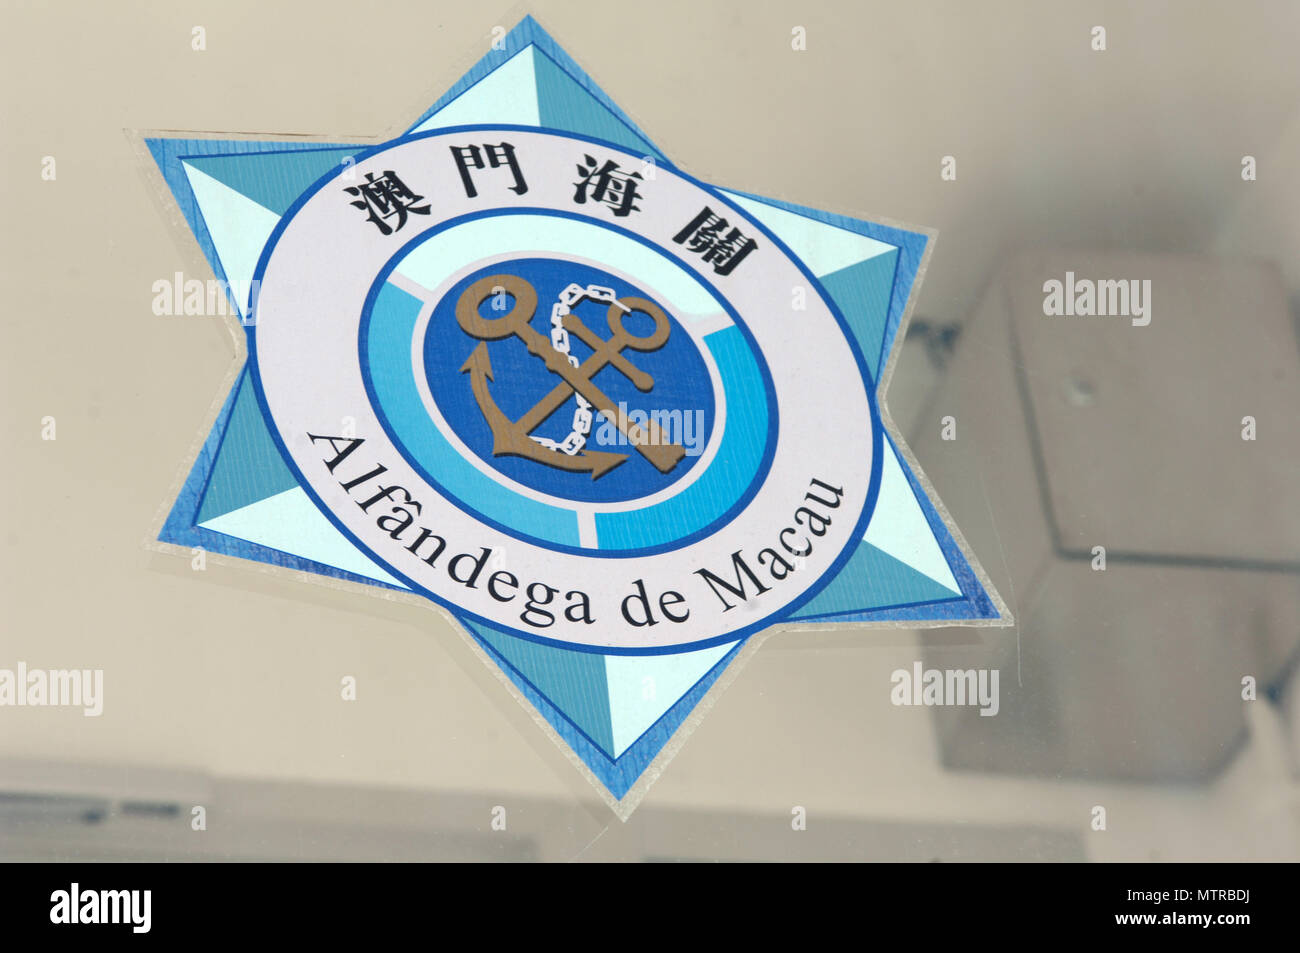 Badge of Alfandega de Macau, Macau, China. Stock Photo